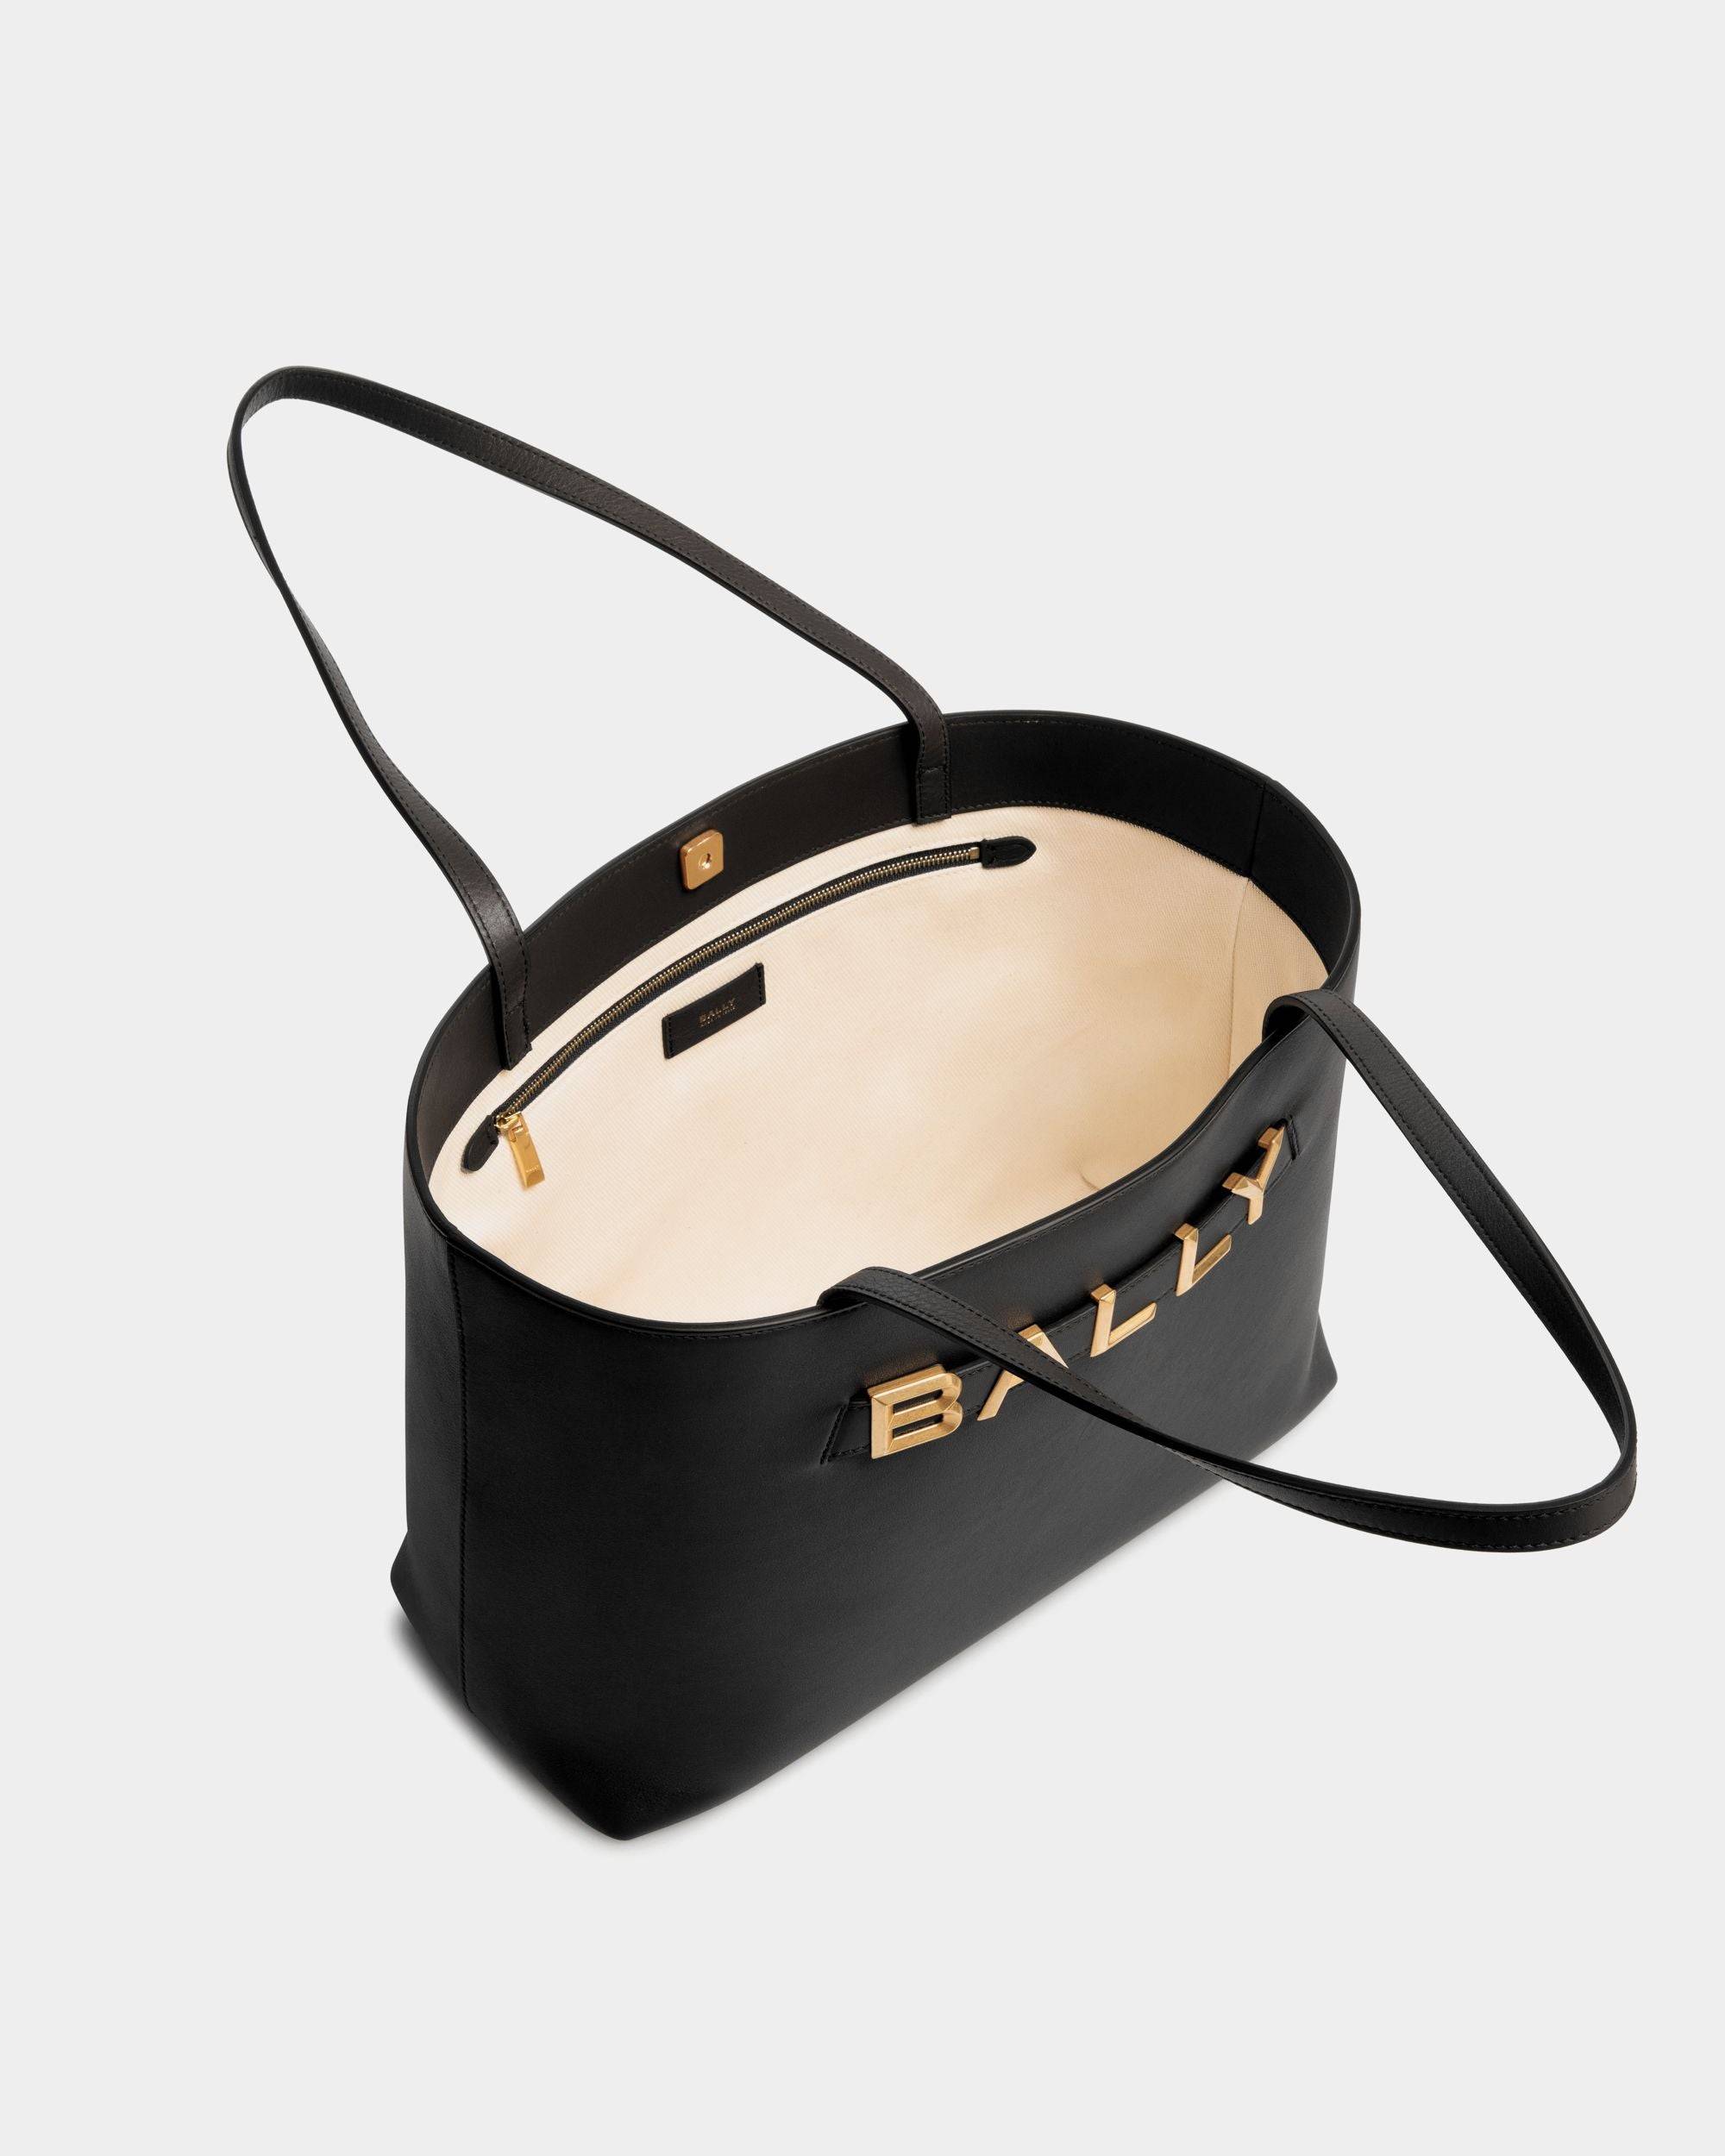 Bally Spell | Women's Tote Bag in Black Leather | Bally | Still Life Open / Inside